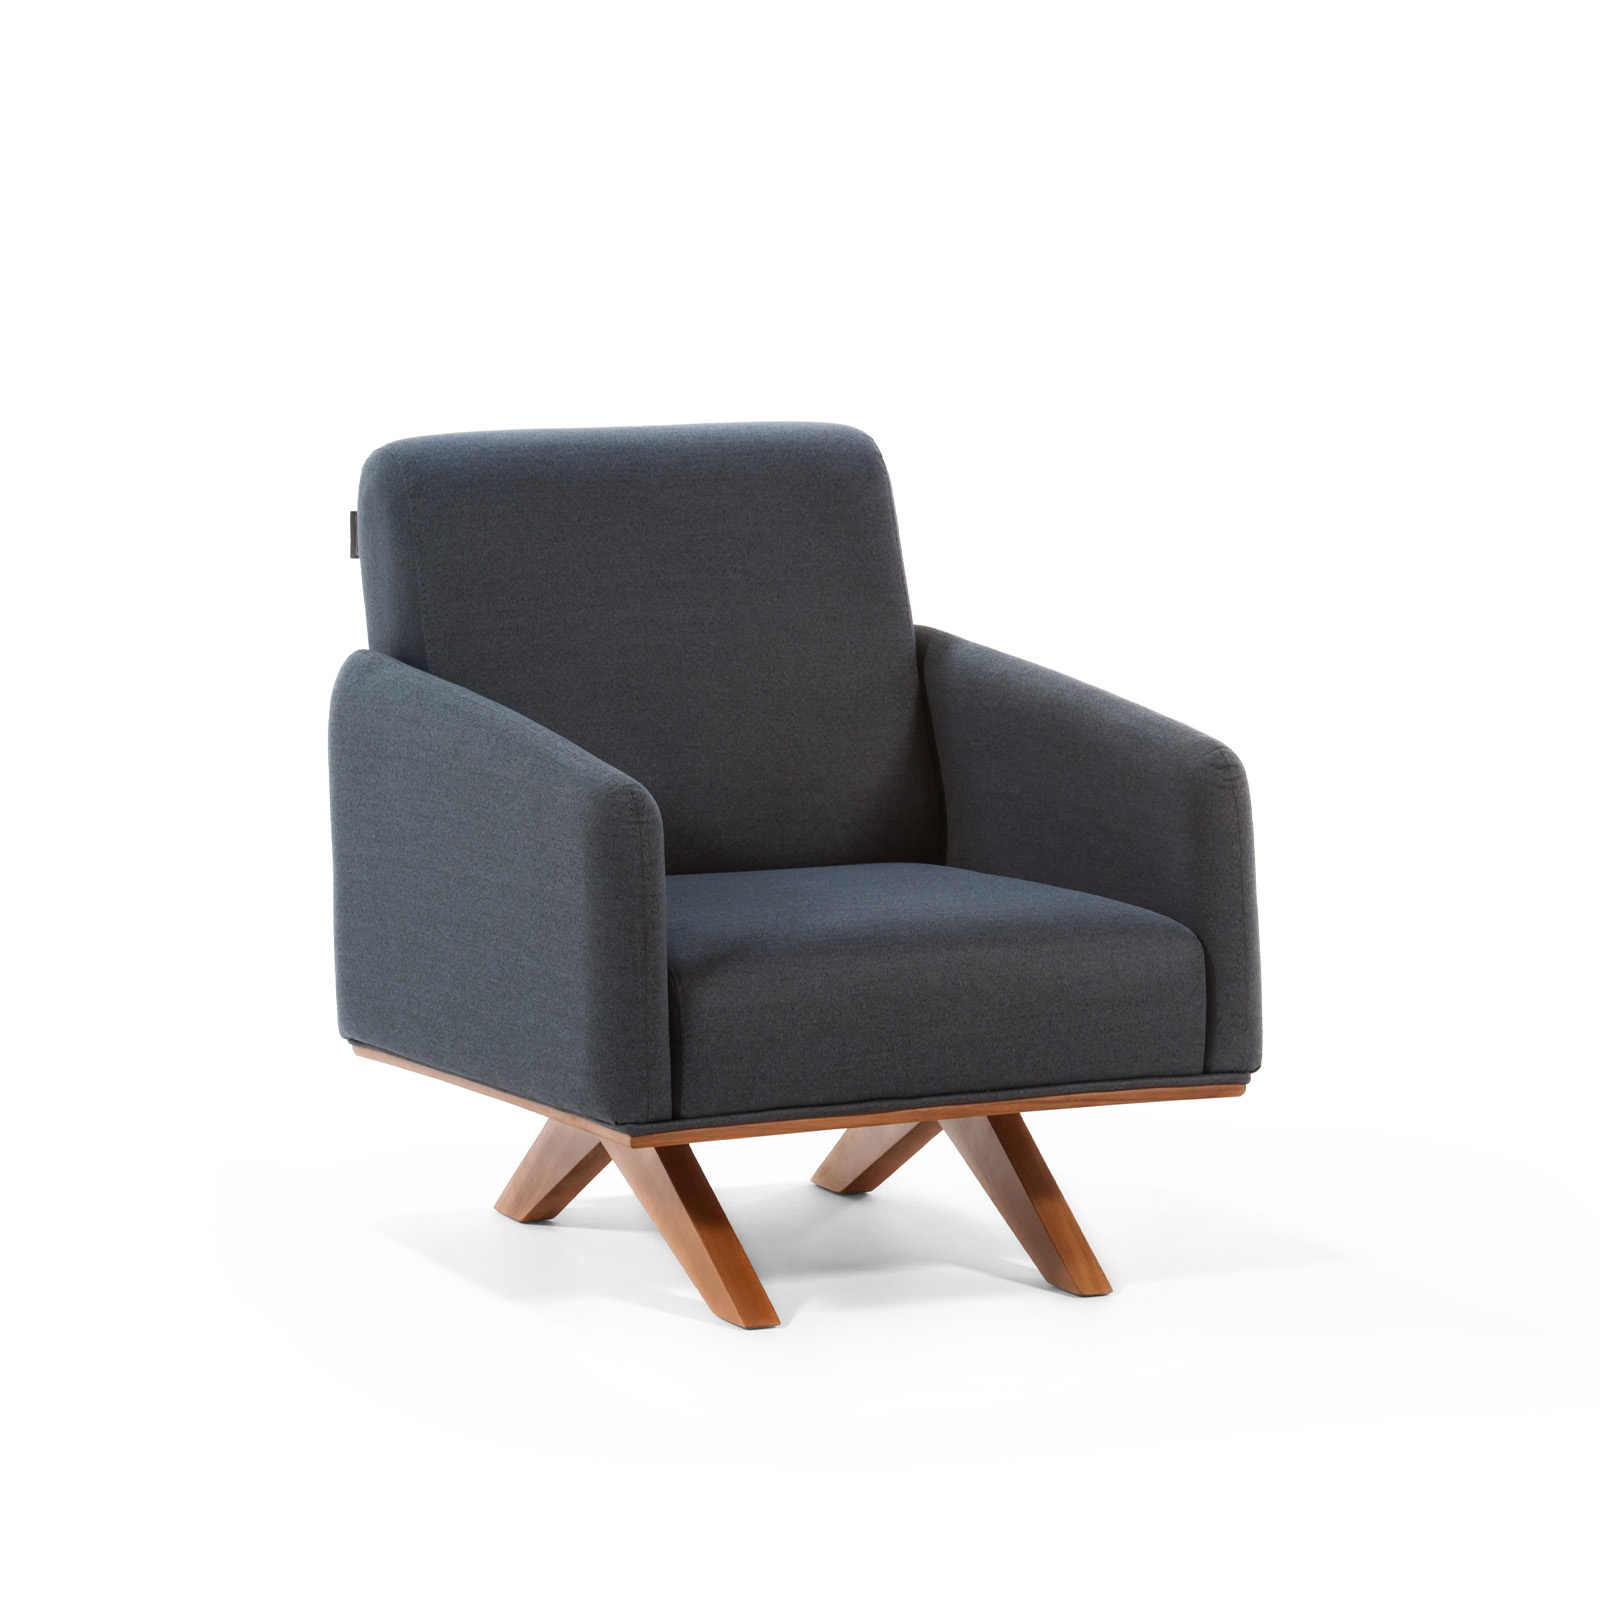 modern armchair with unique design wooden legs